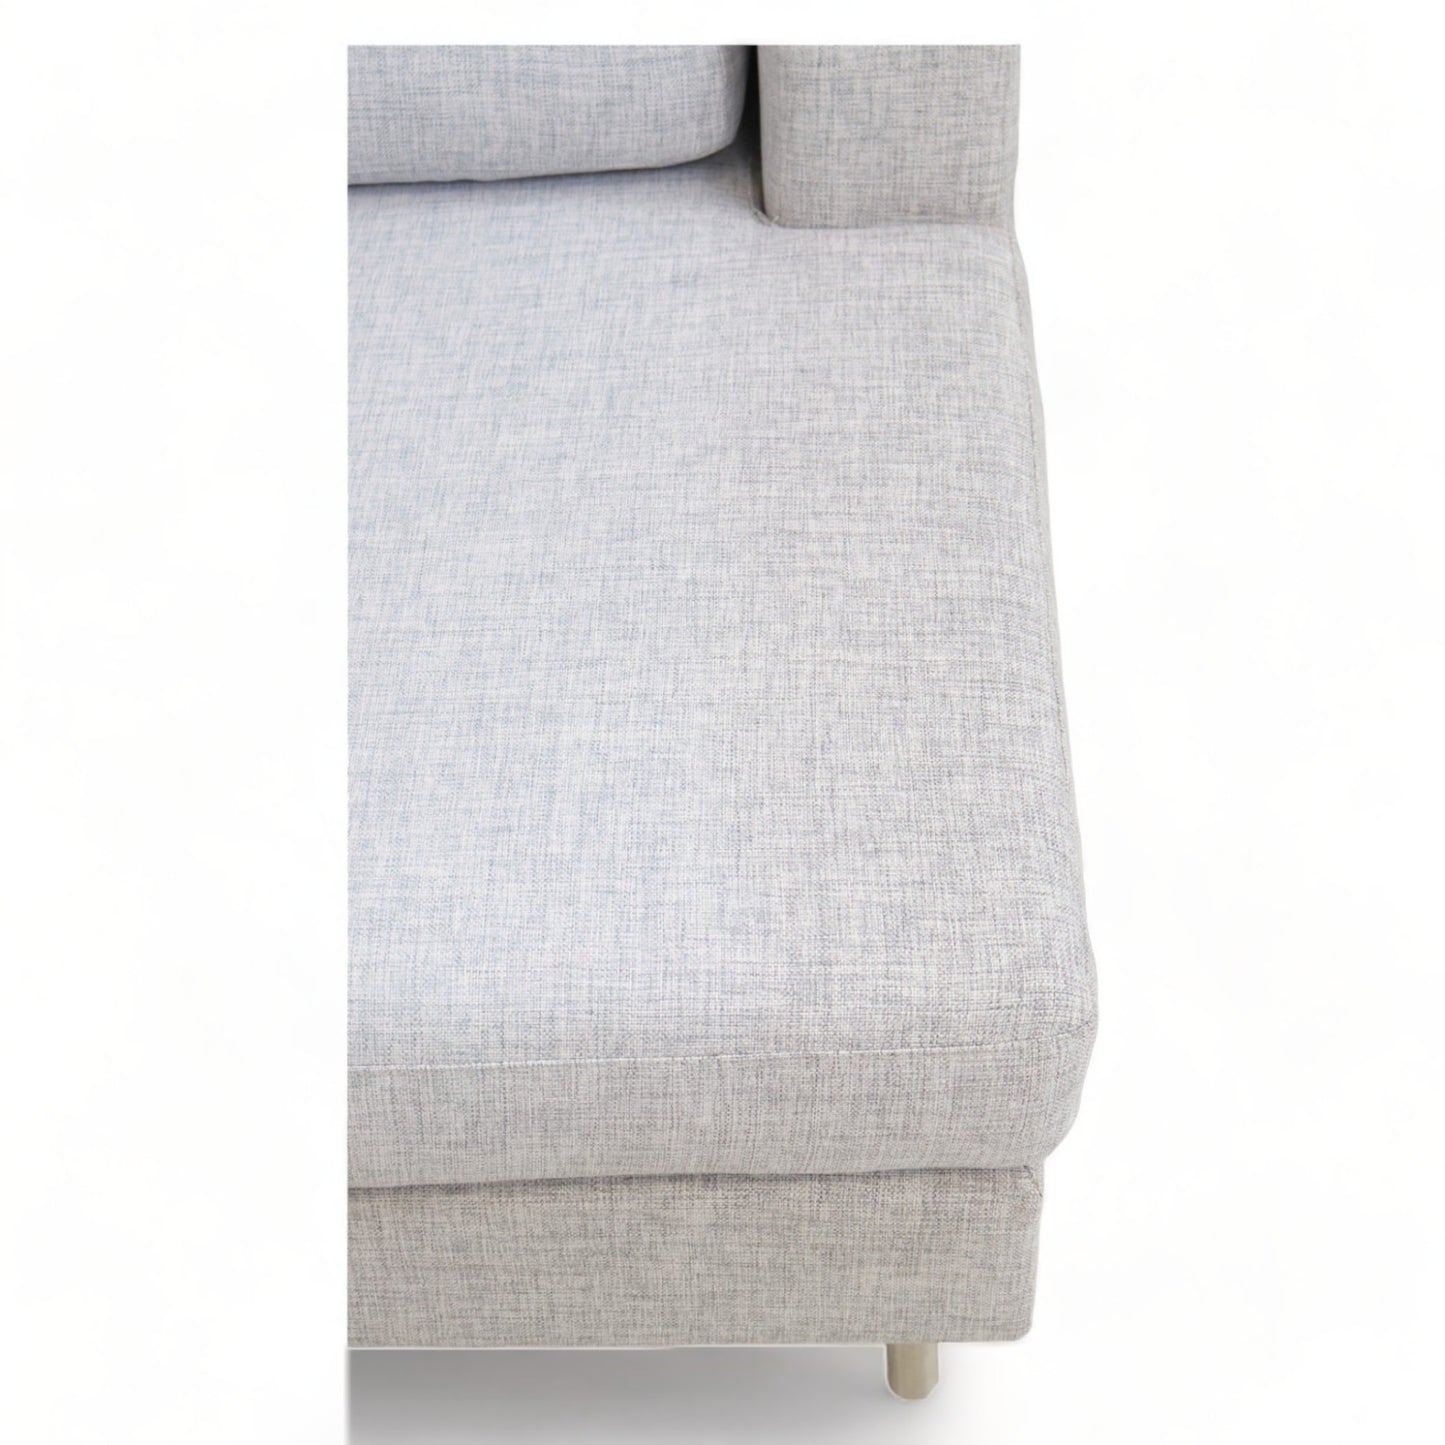 Nyrenset | Bolia Scandinavia sofa med sjeselong